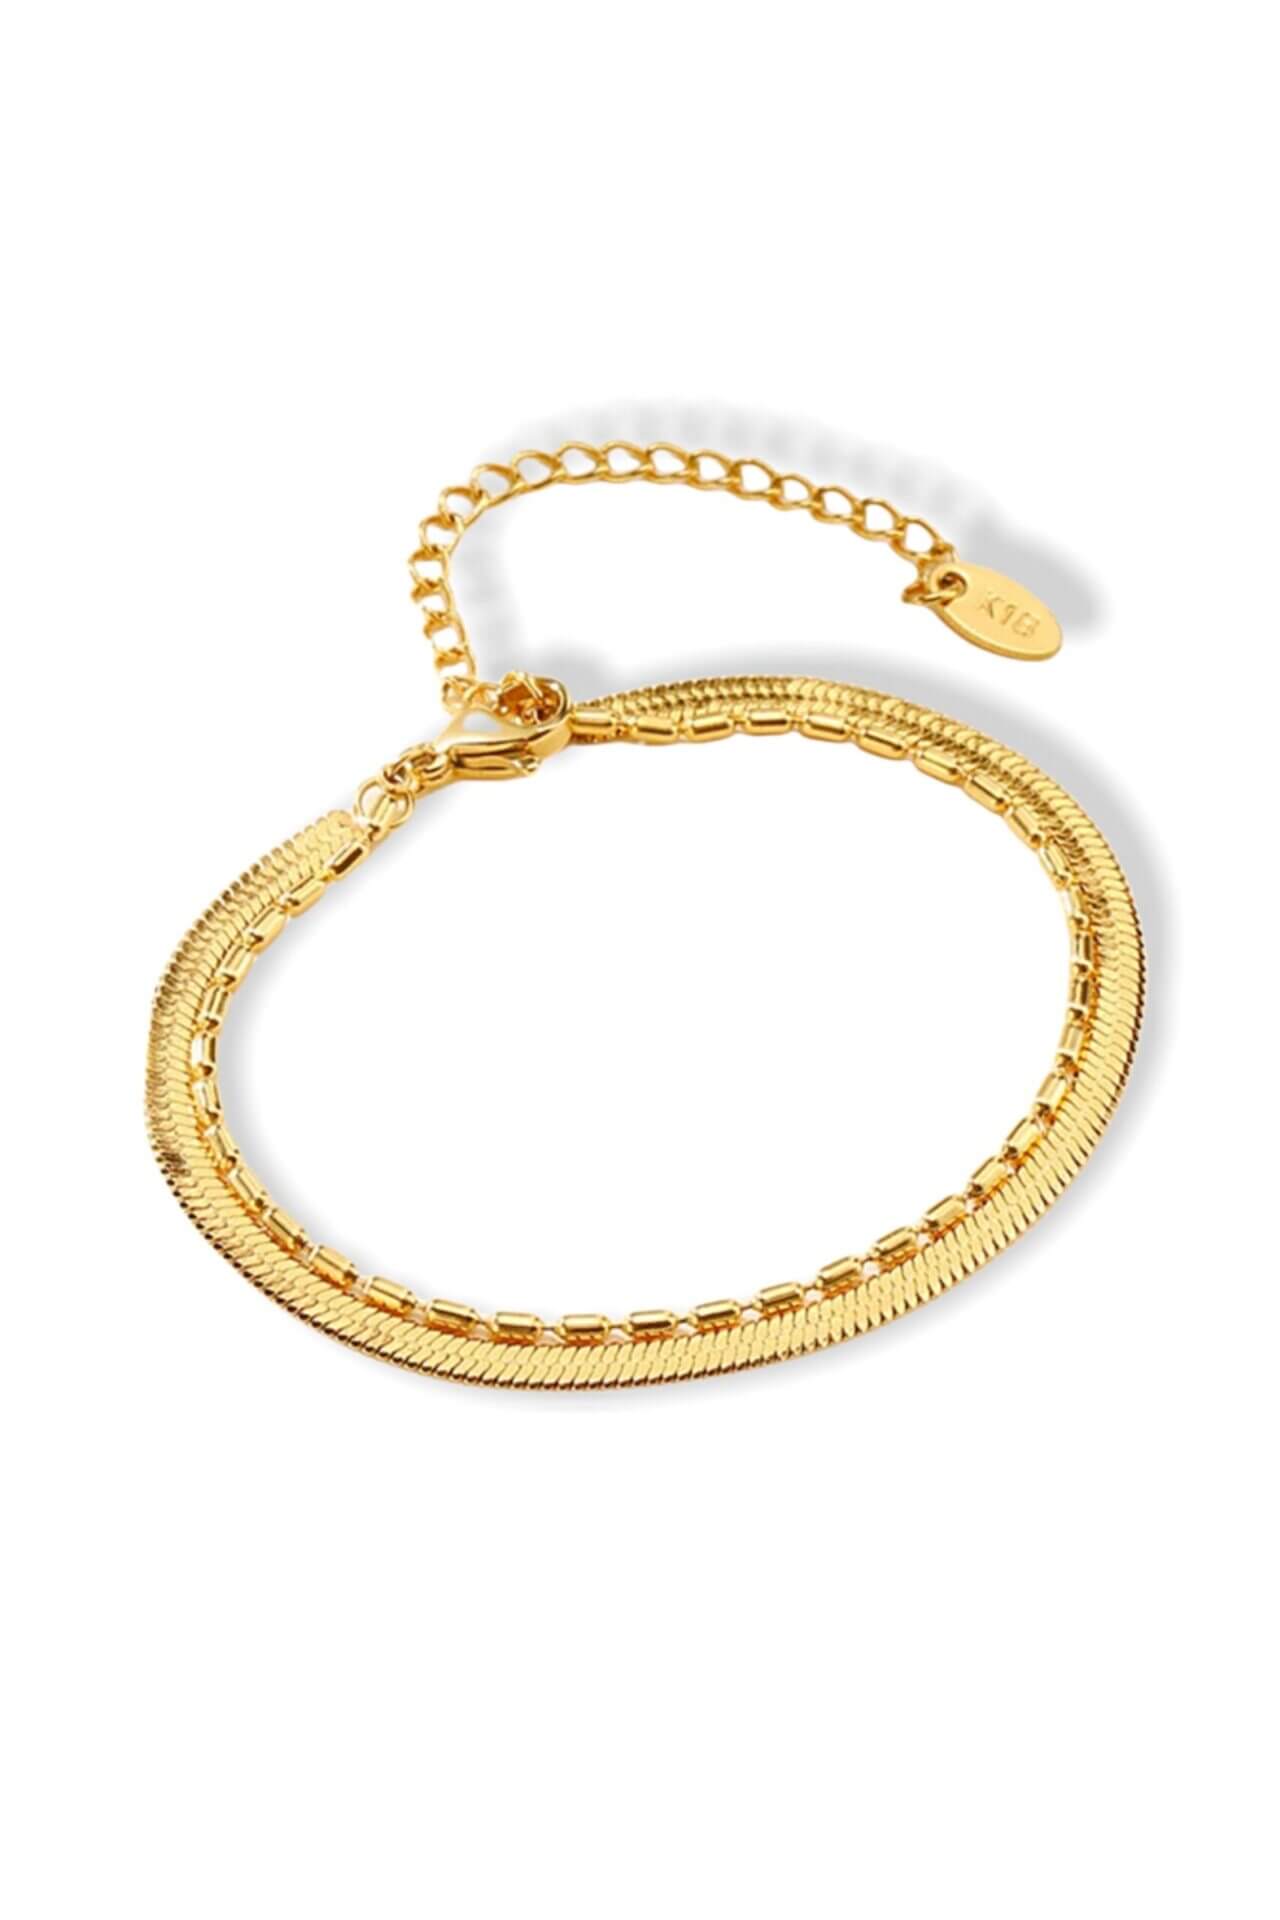 18K Gold Plated Double Chain Bracelet - Handmade, Hypoallergenic, Adjustable Fit Bijou Her